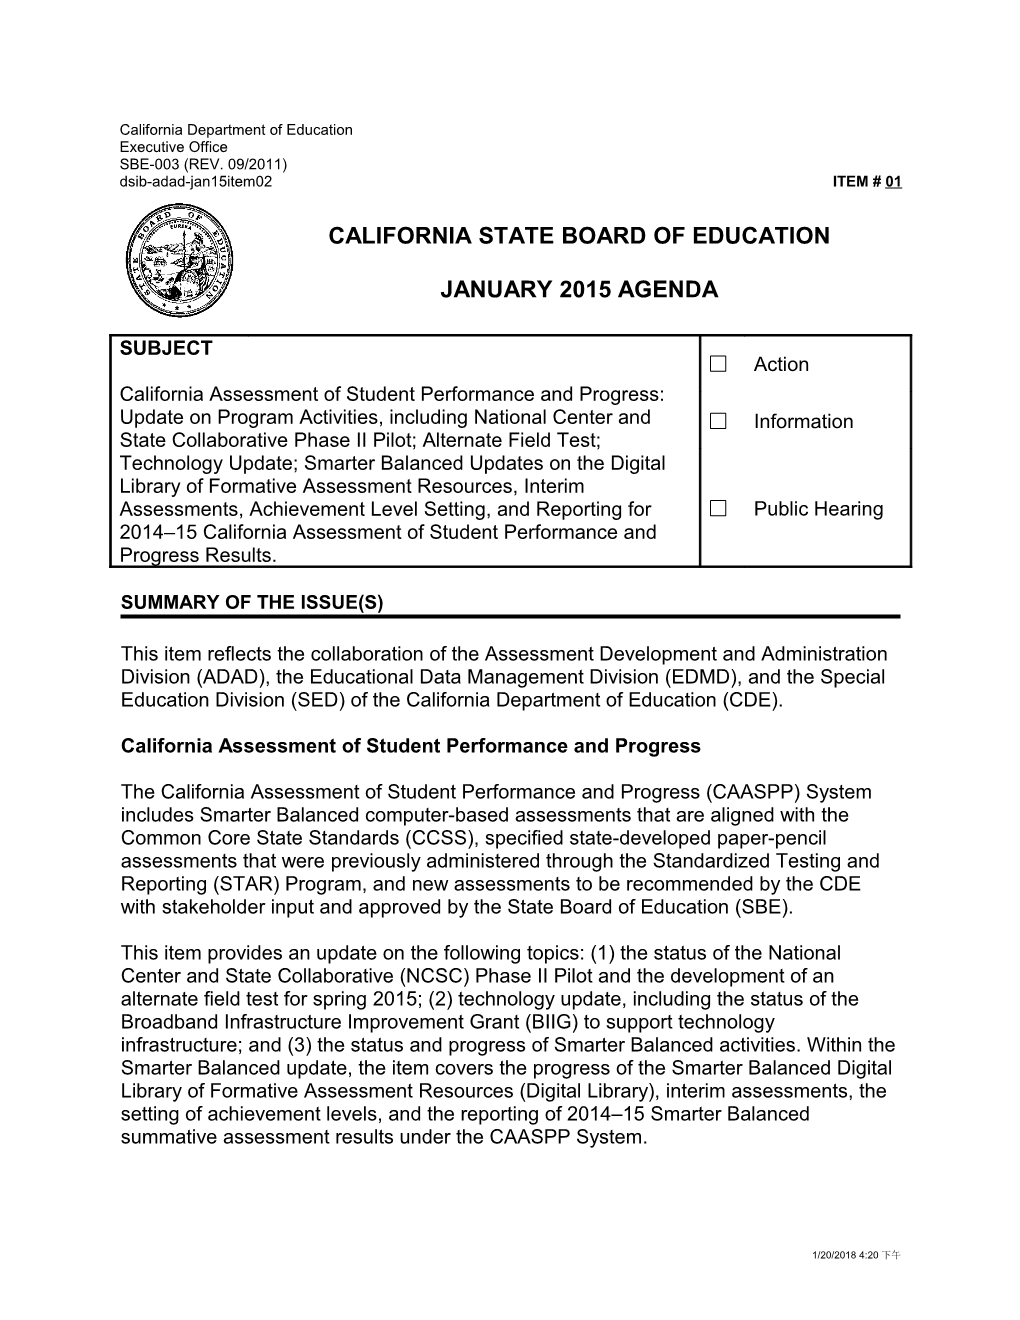 January 2015 Agenda Item 01 - Meeting Agendas (CA State Board of Education)